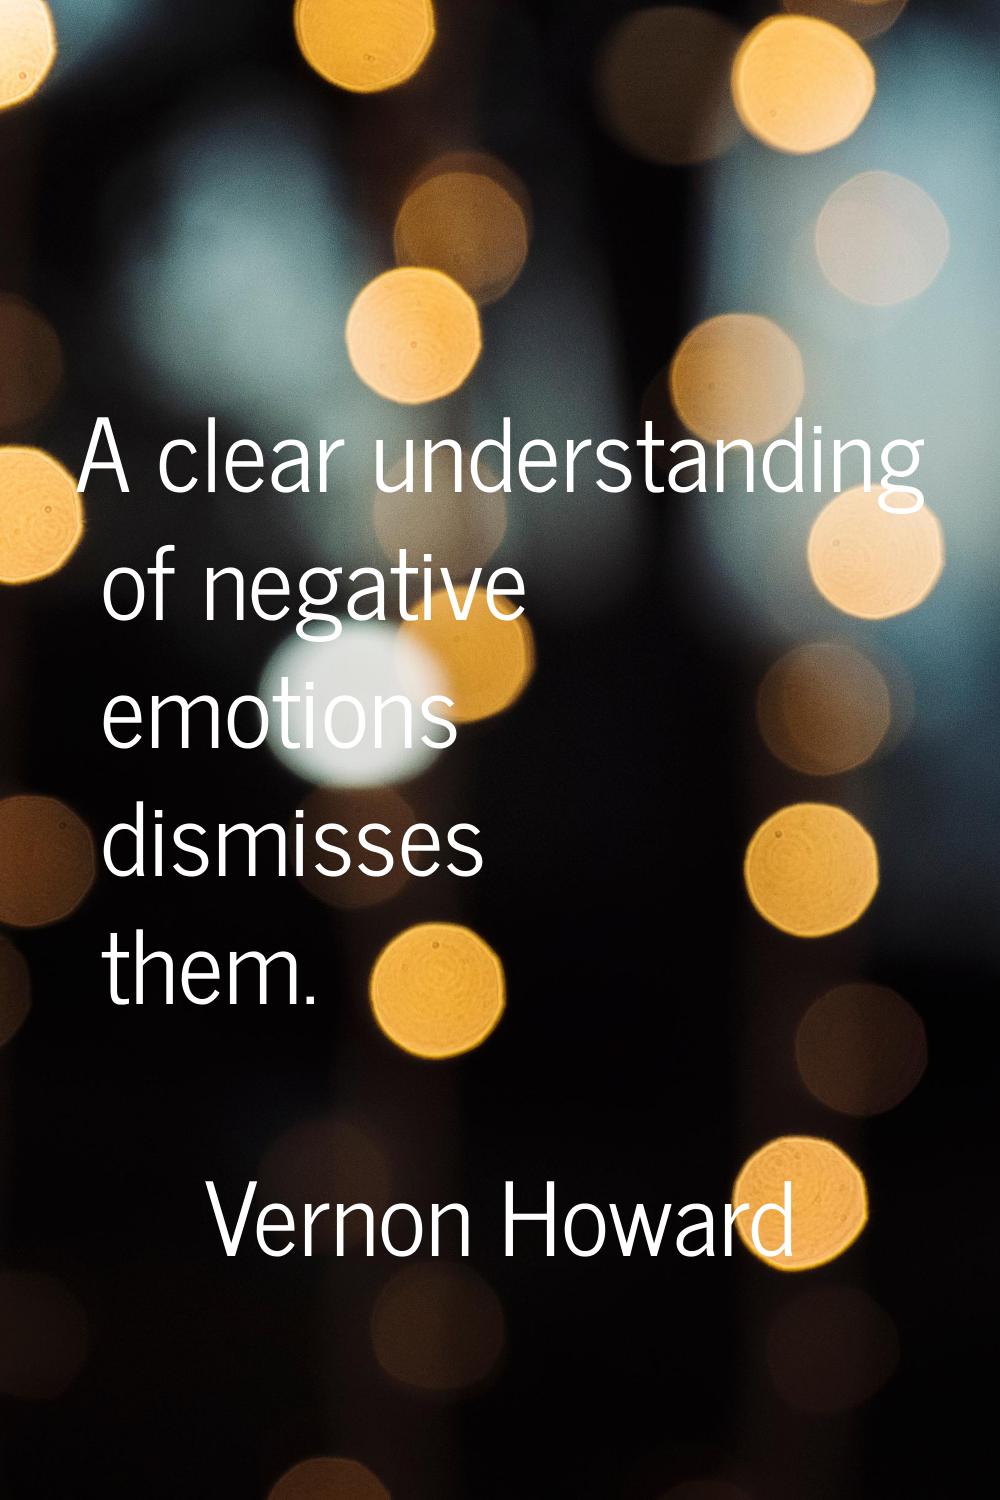 A clear understanding of negative emotions dismisses them.